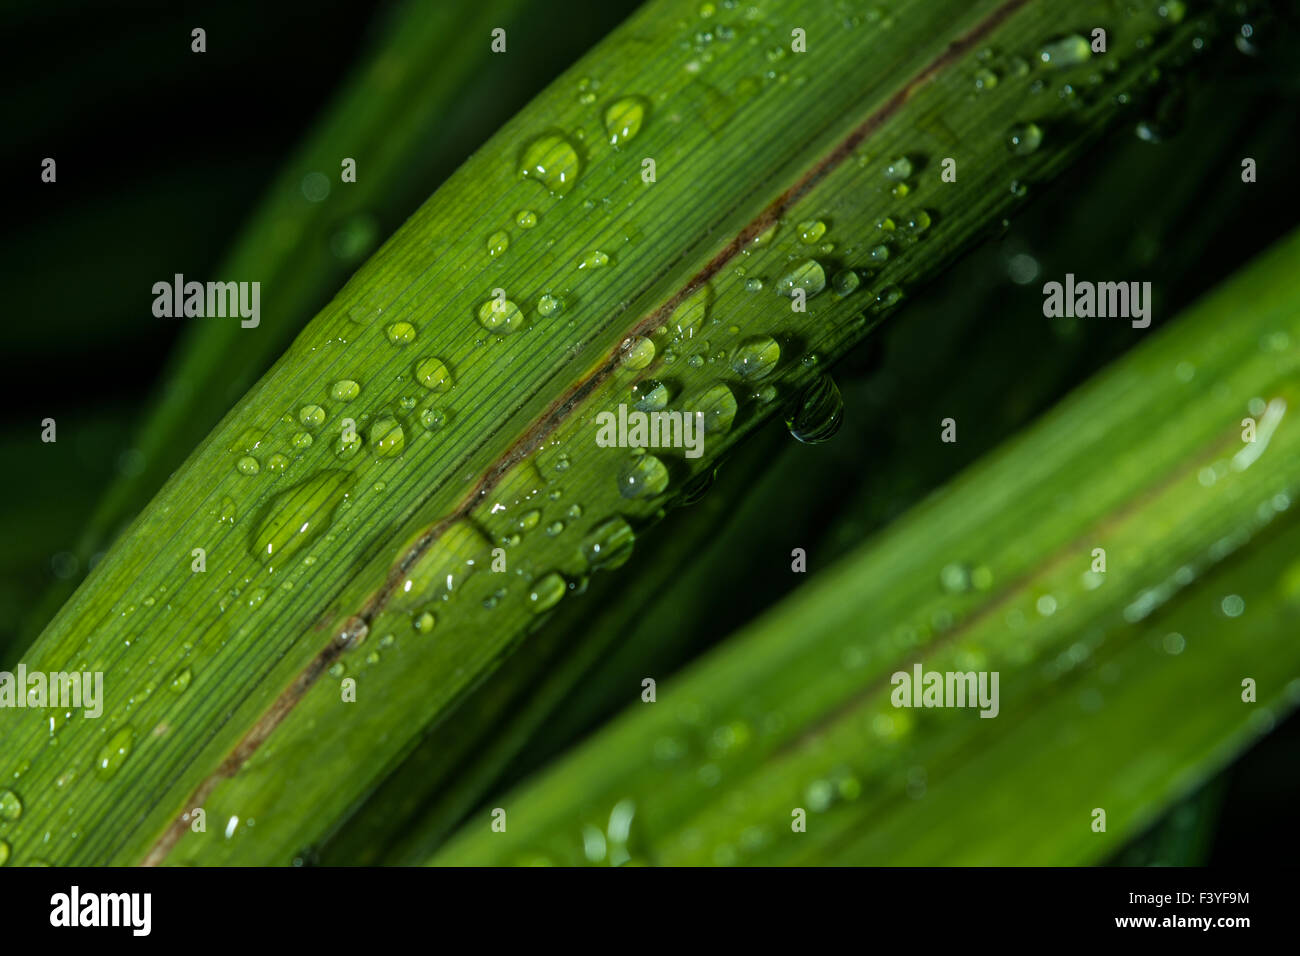 grassy with dew drop Stock Photo